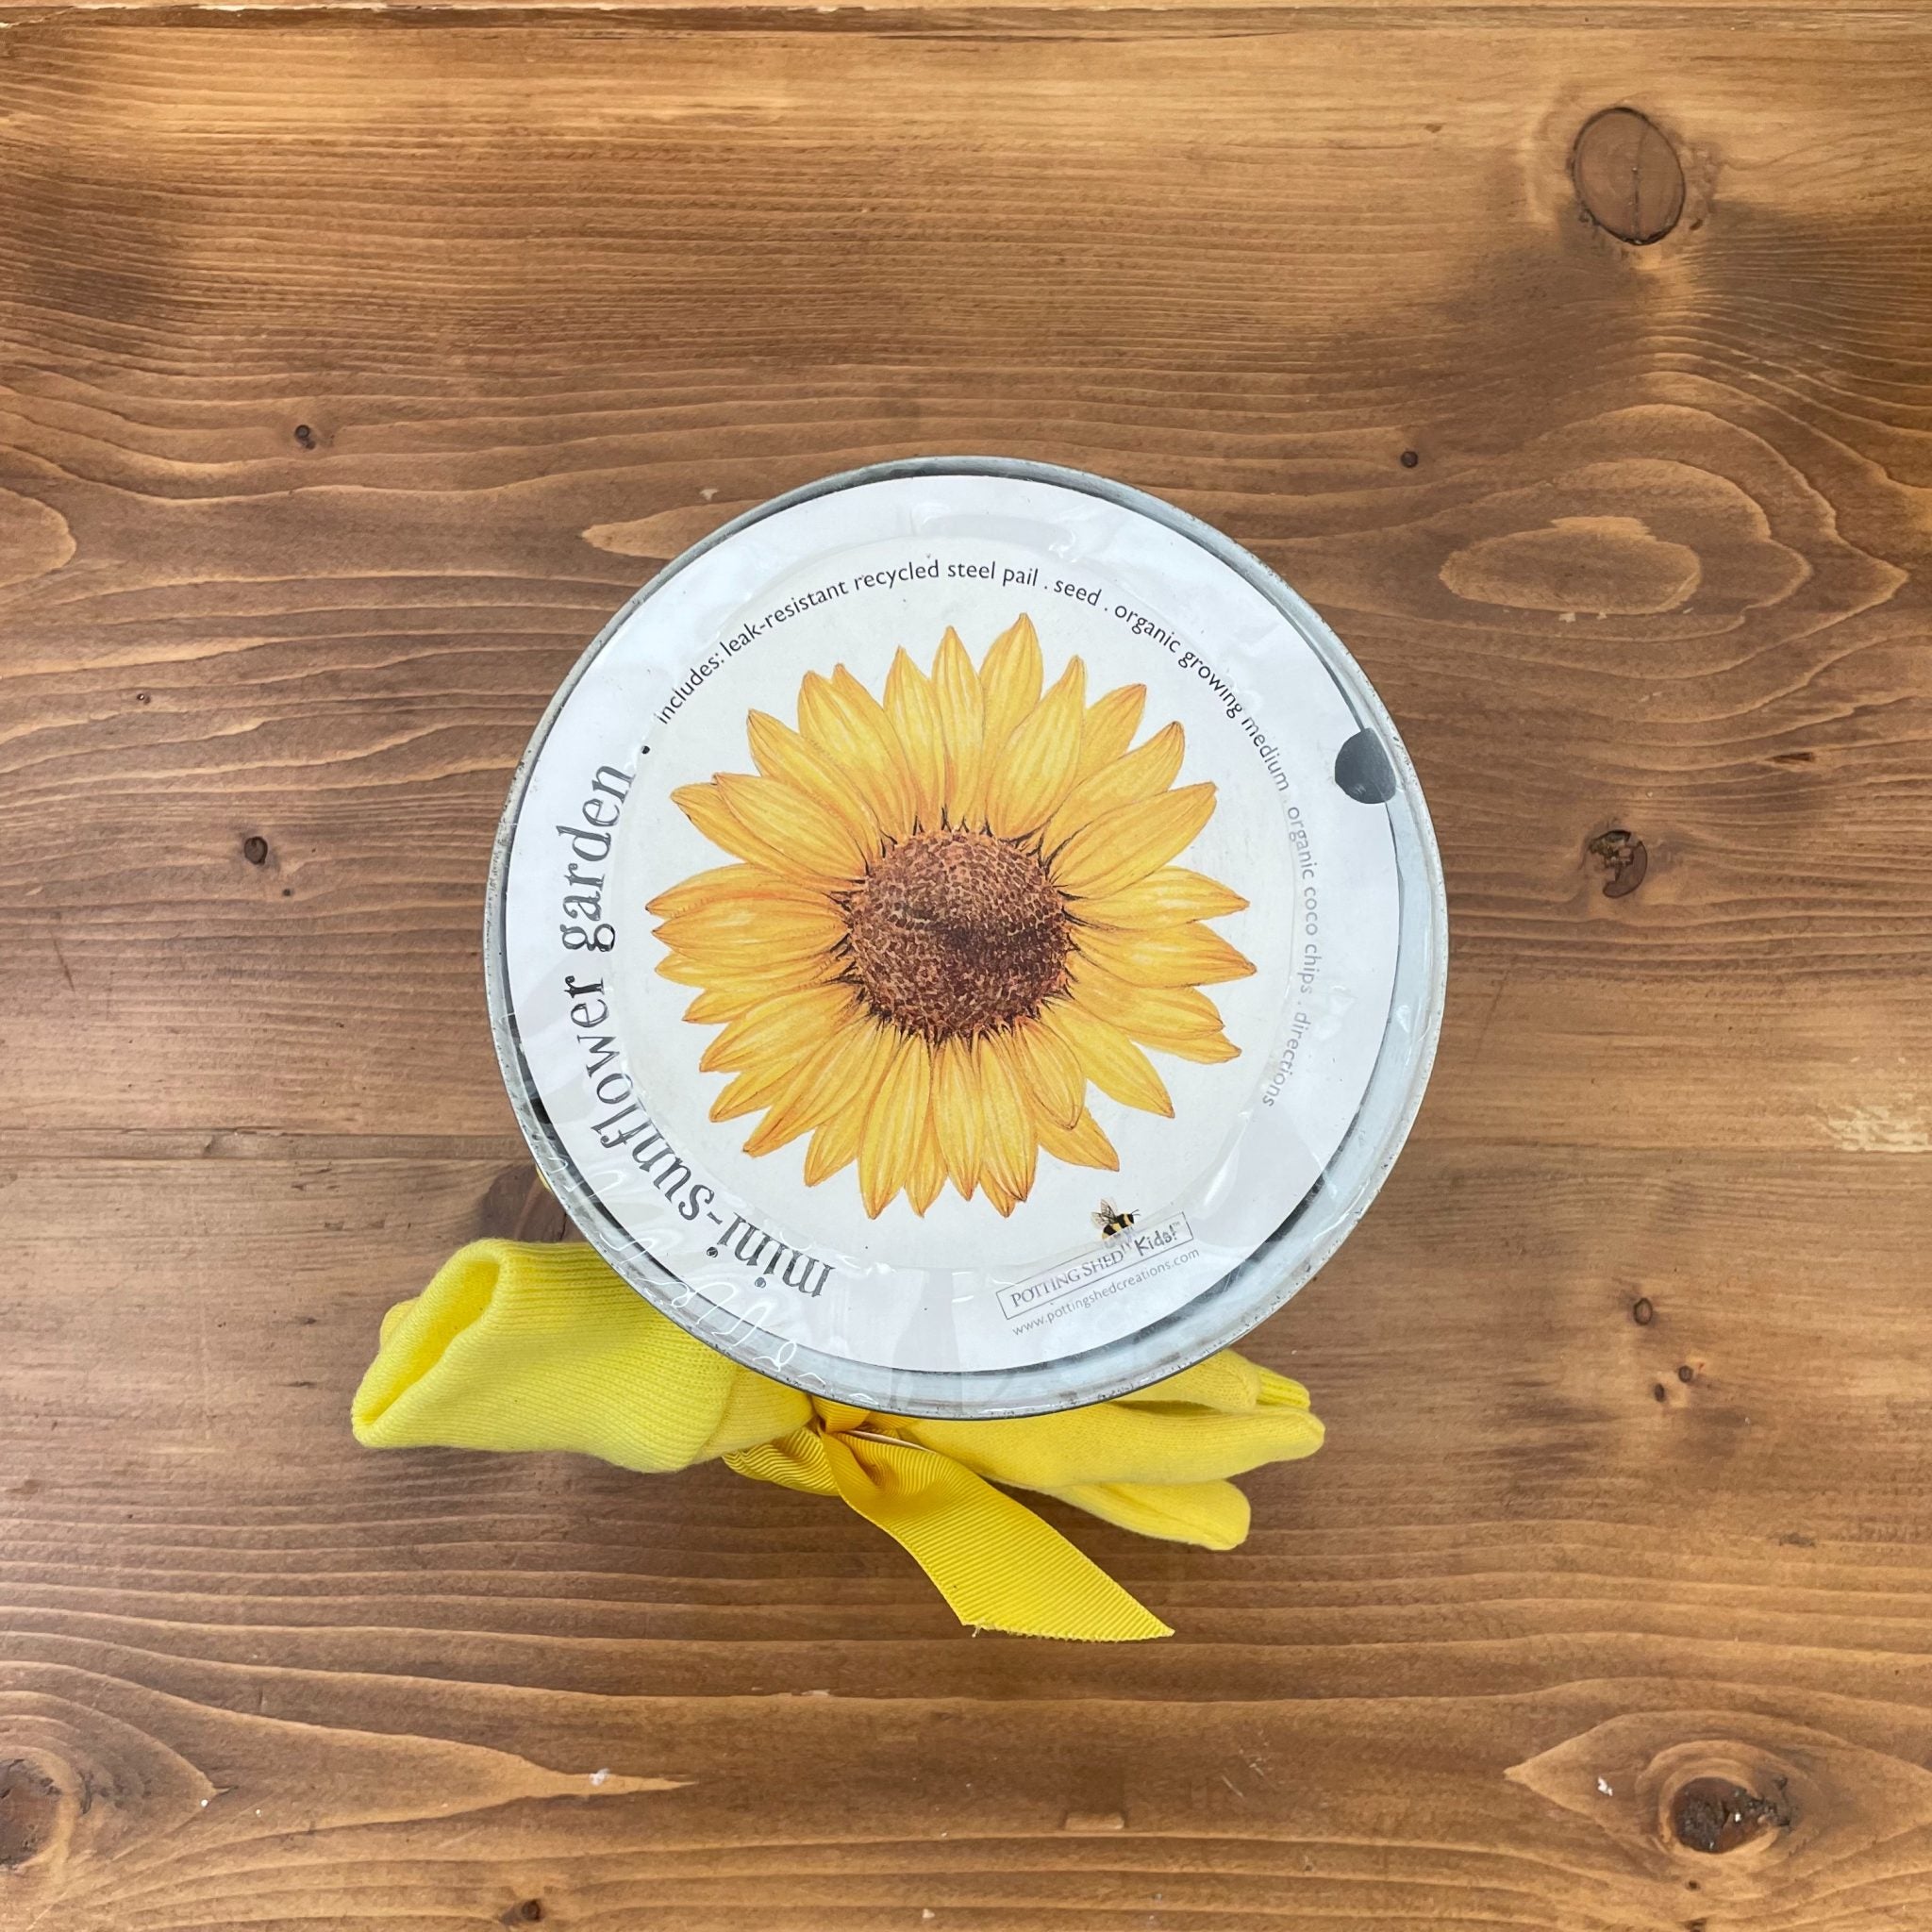 Potting-Shed Mini garden: sunflower to grow